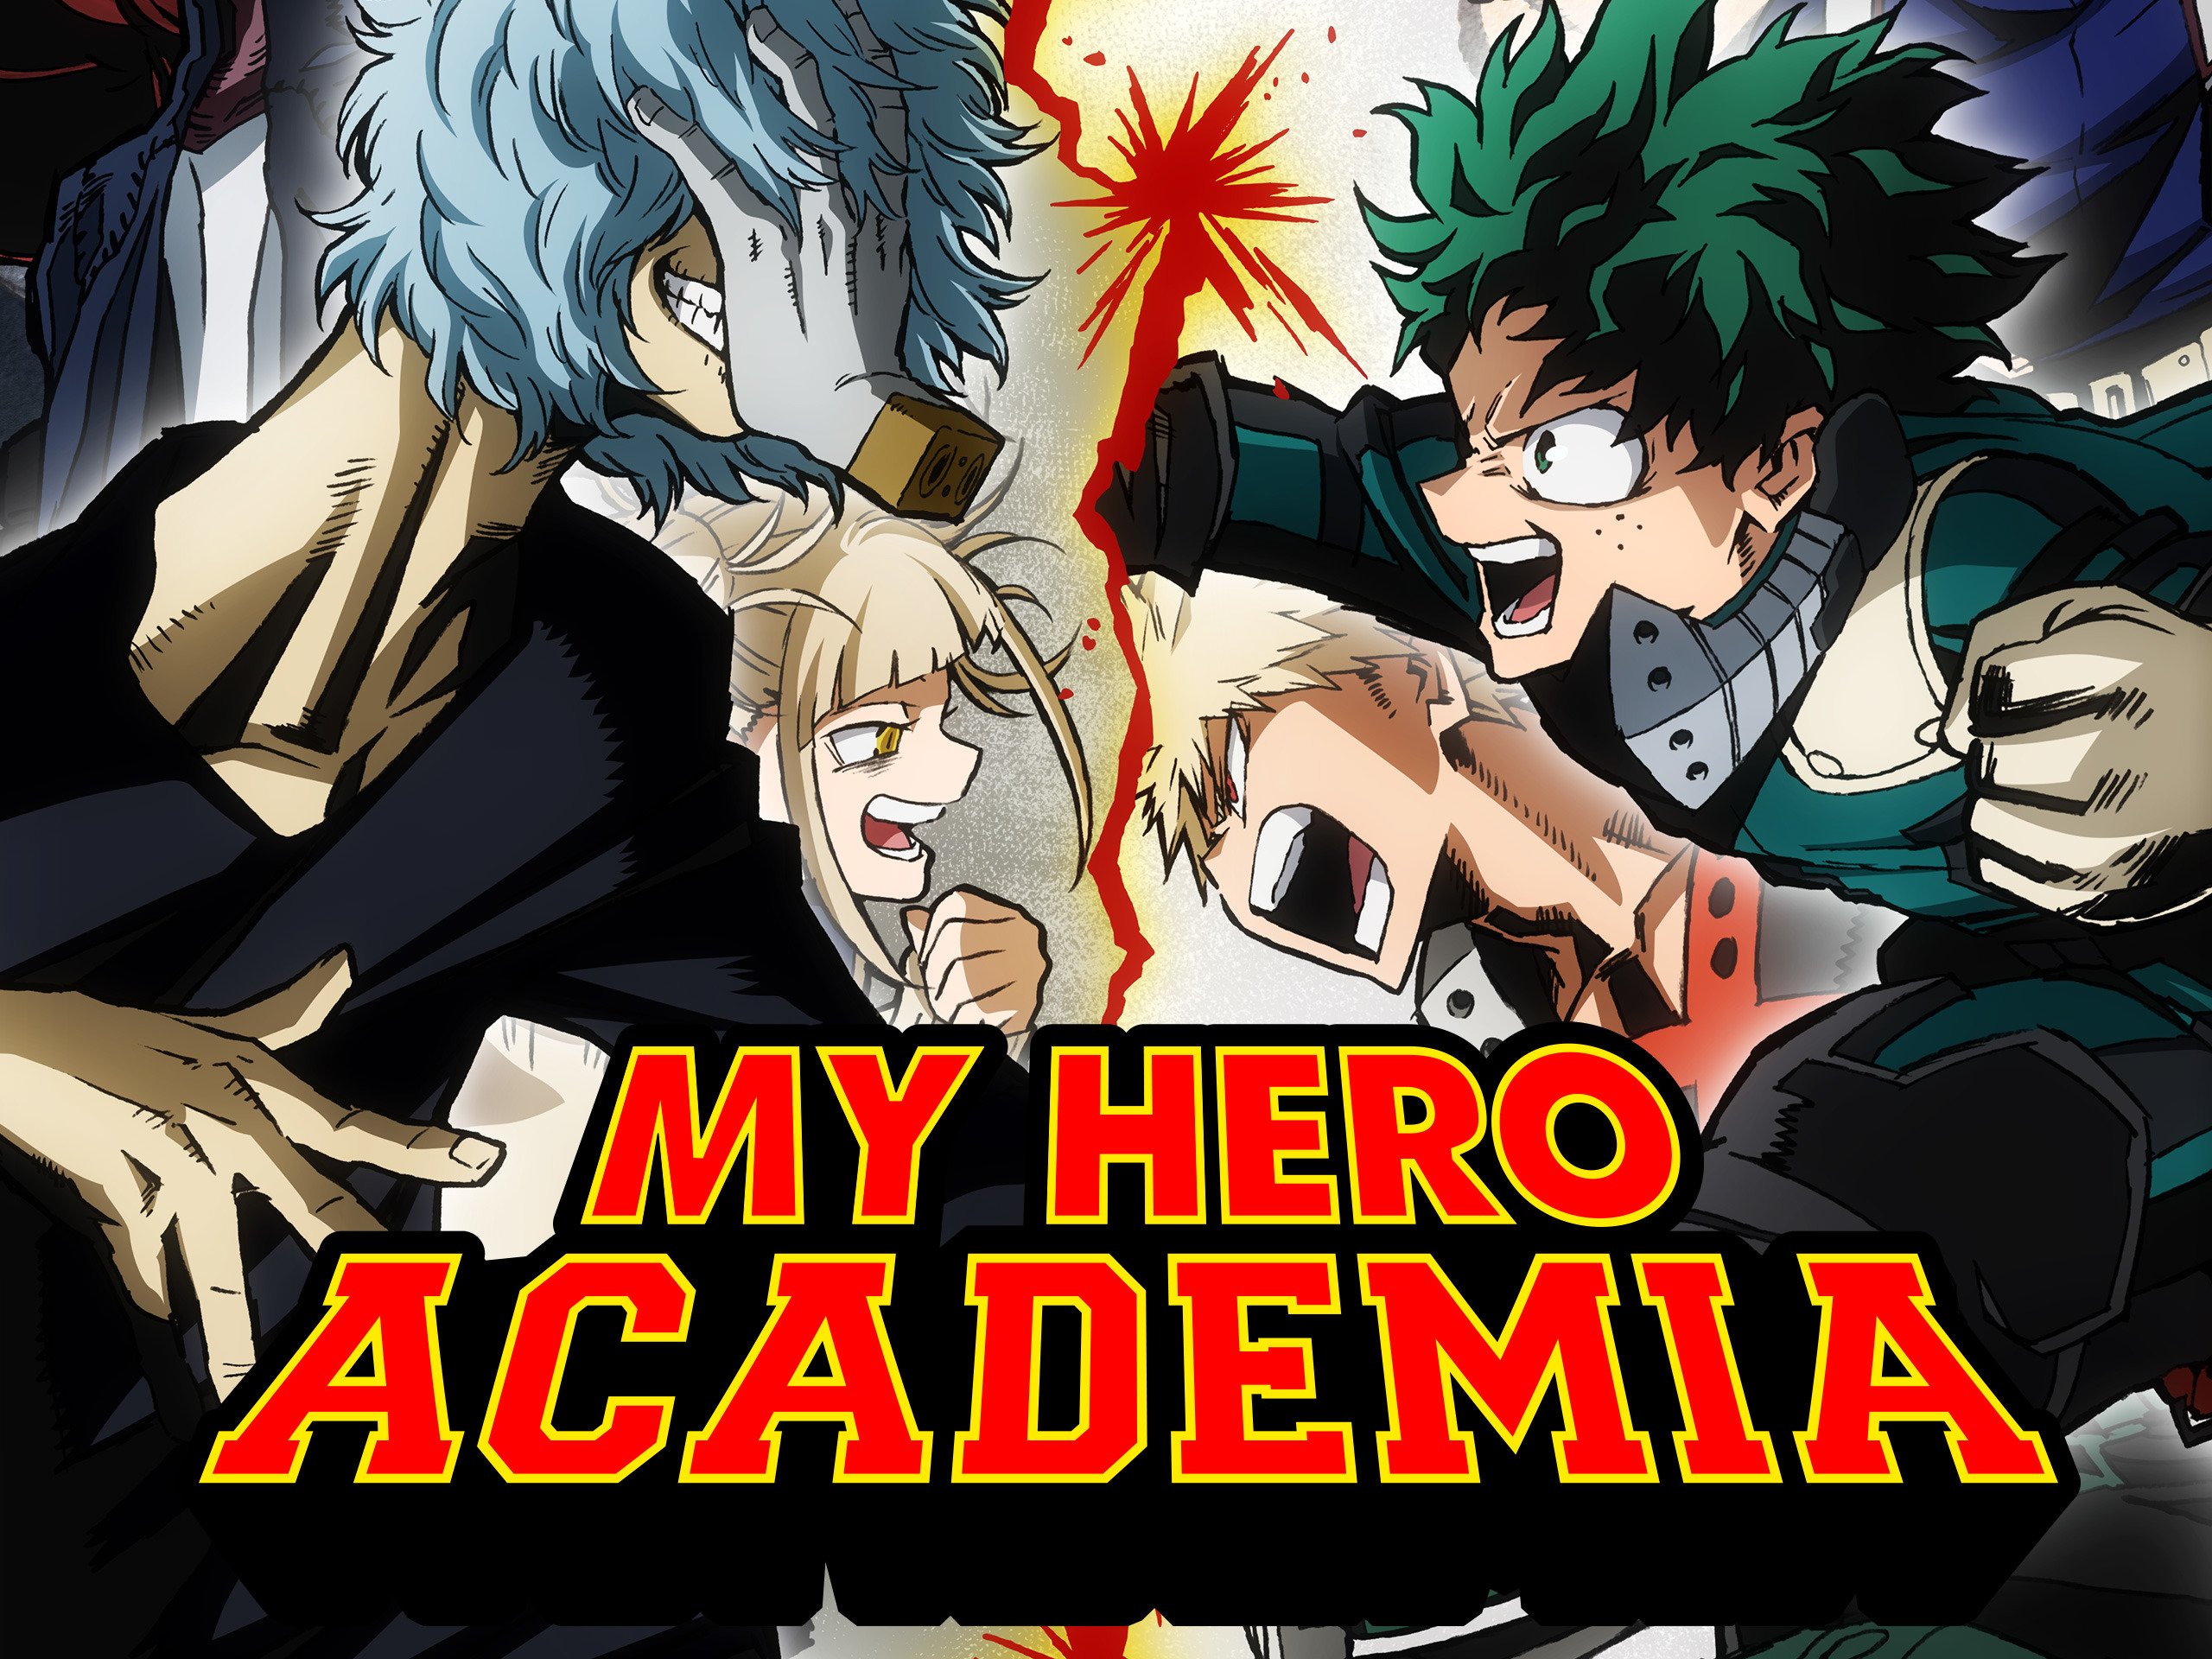 My Hero Academia episode 26 Release date, spoiler and more